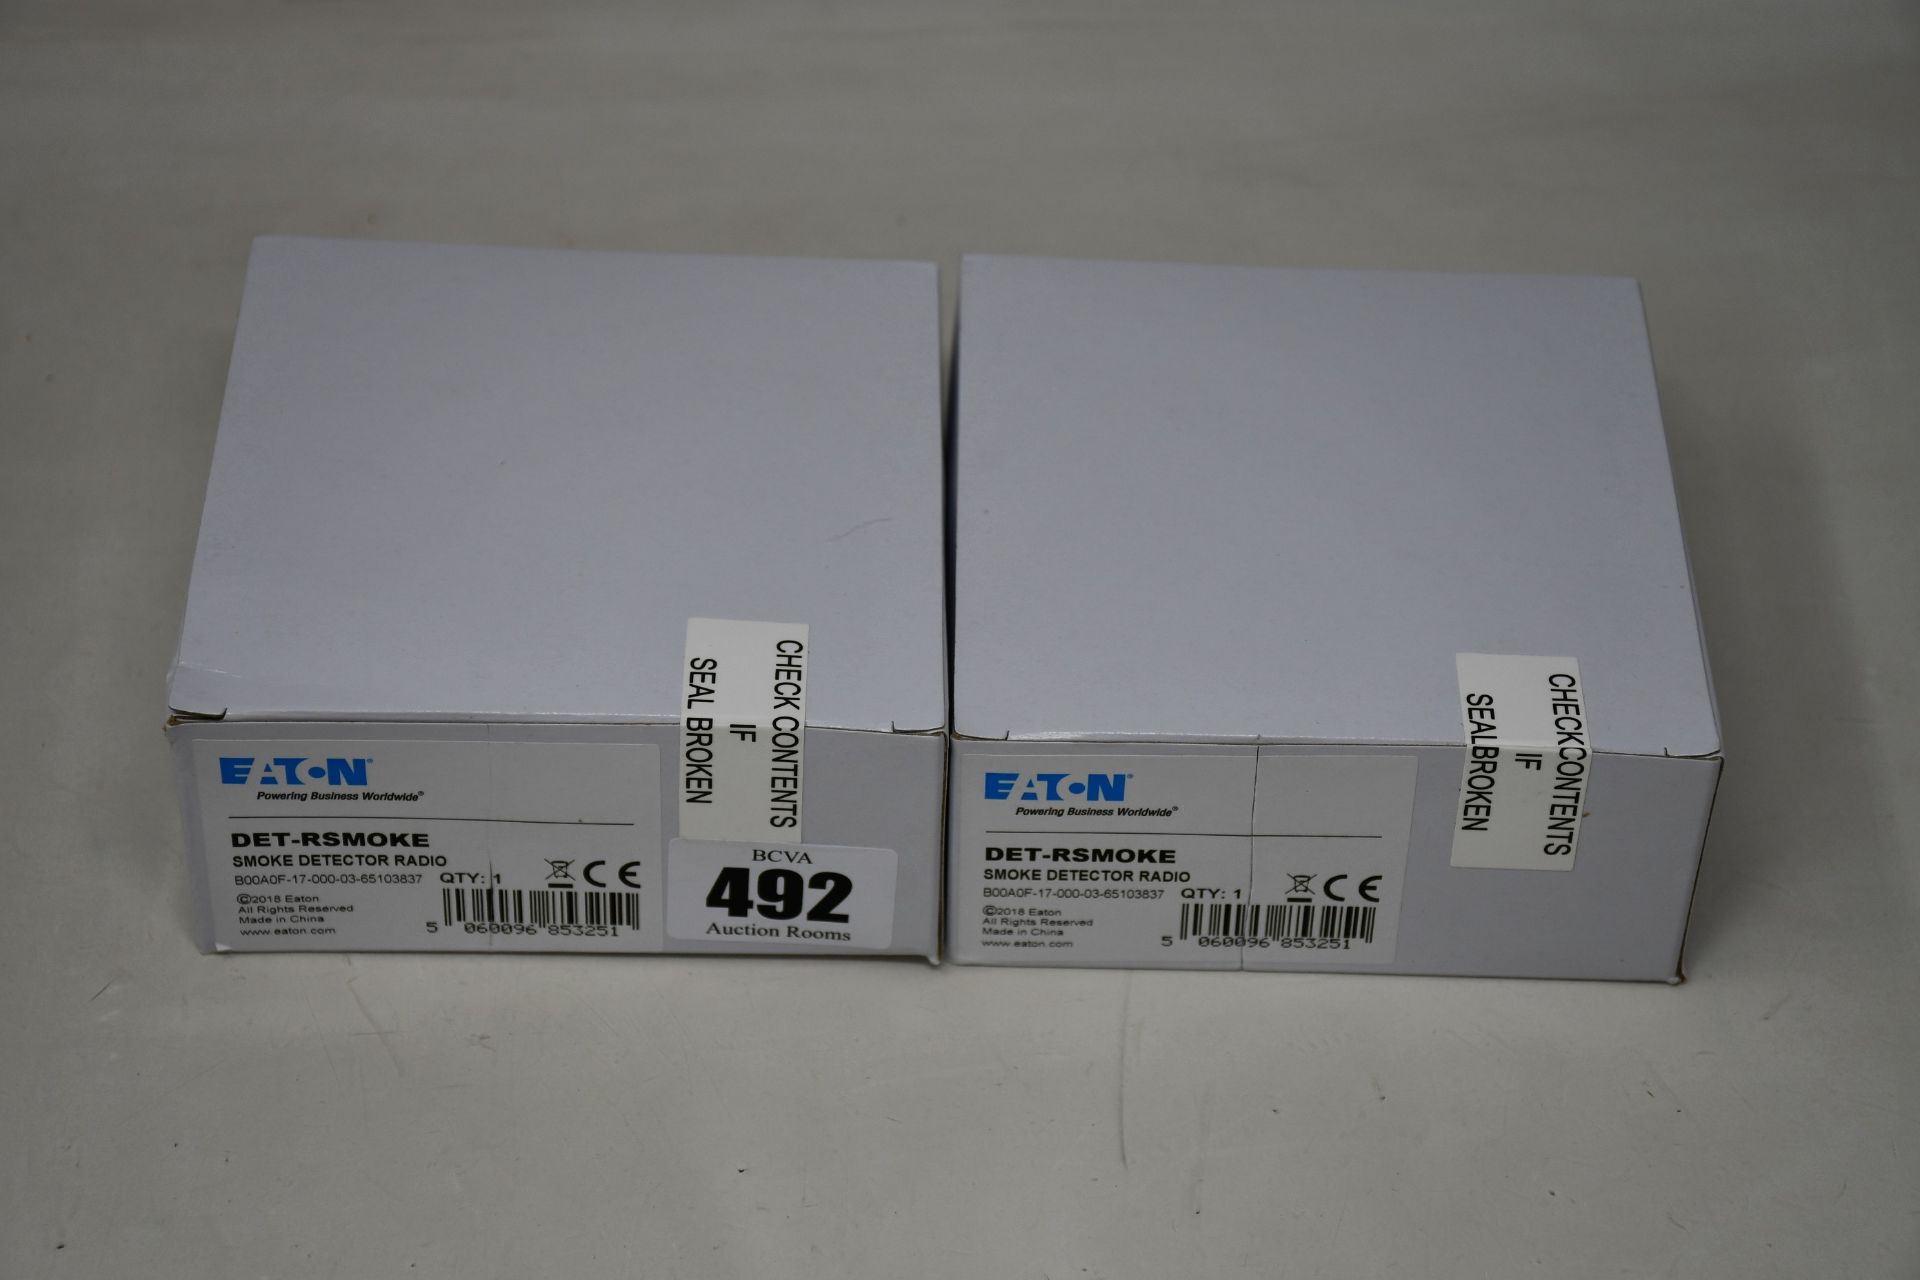 Eight boxed as new Eaton DET-RSMOKE radio smoke detectors.